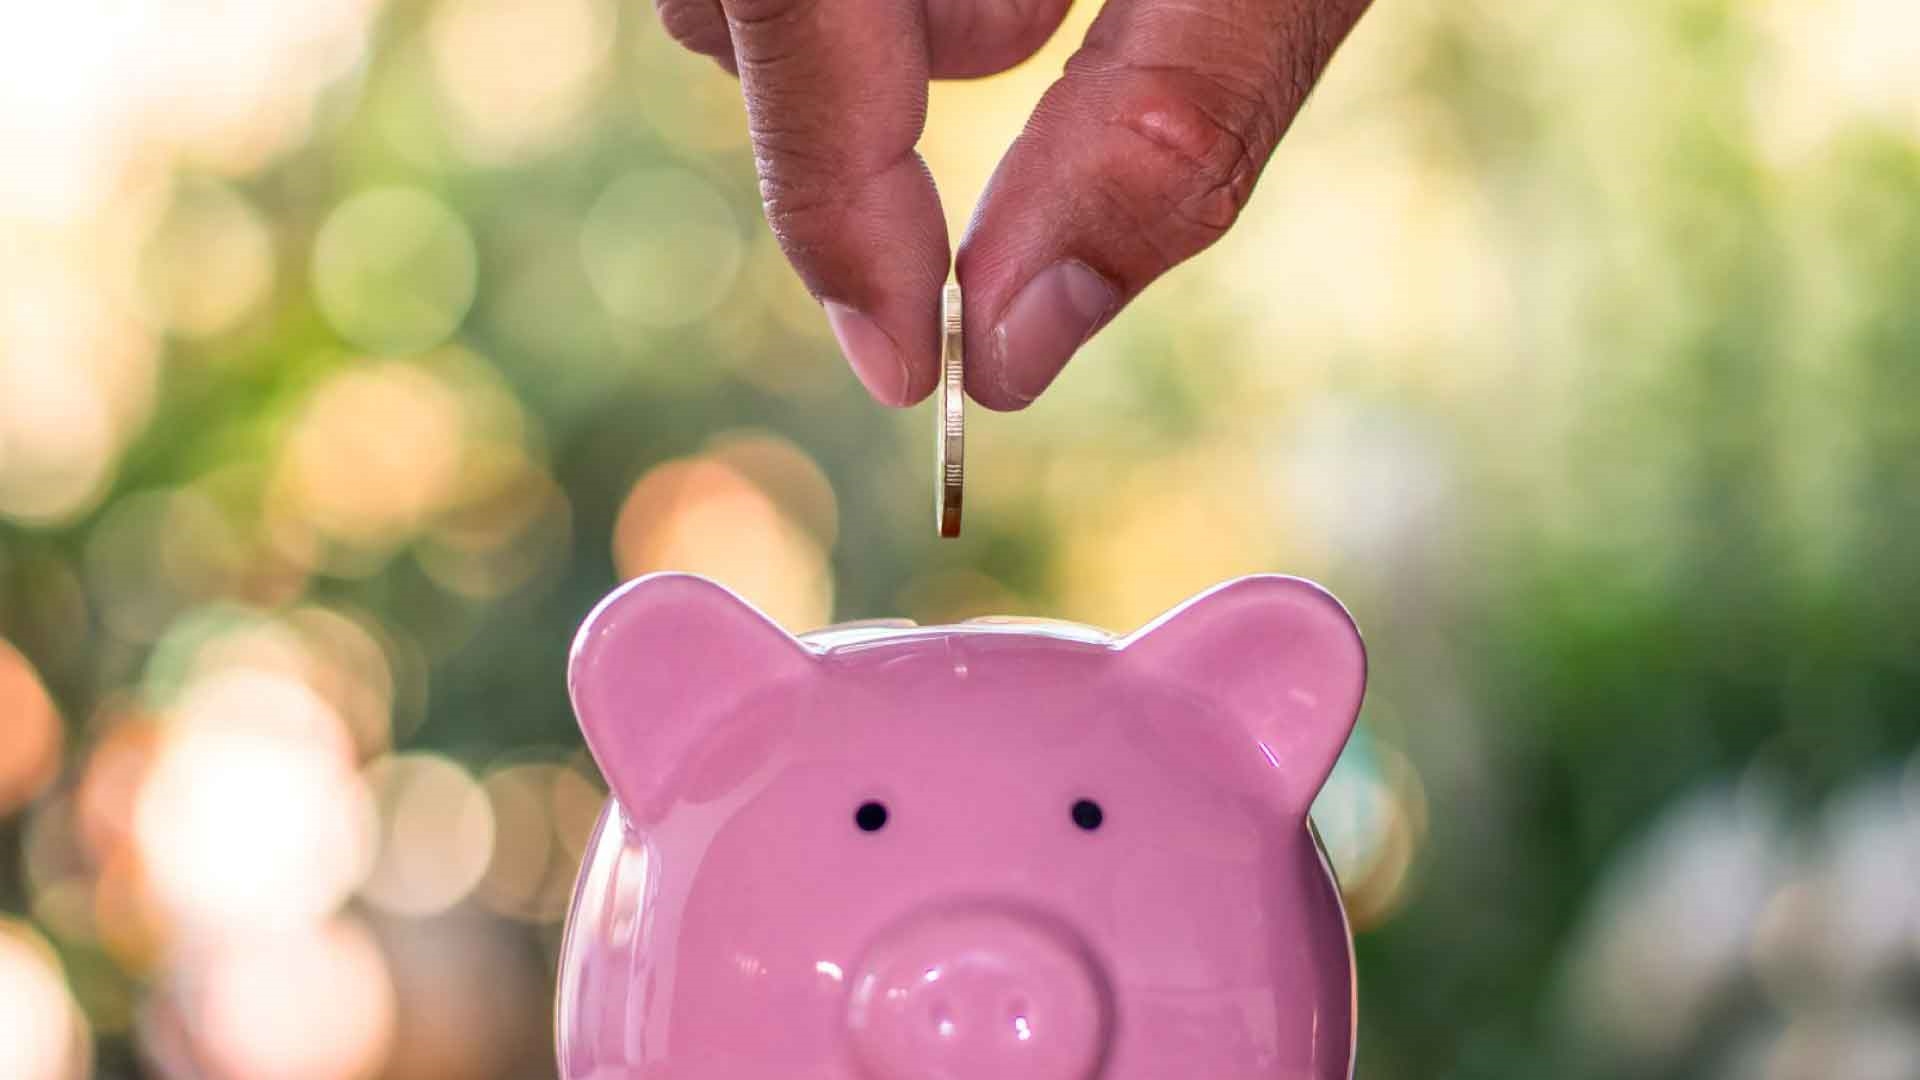 Hand placing coin into piggy bank